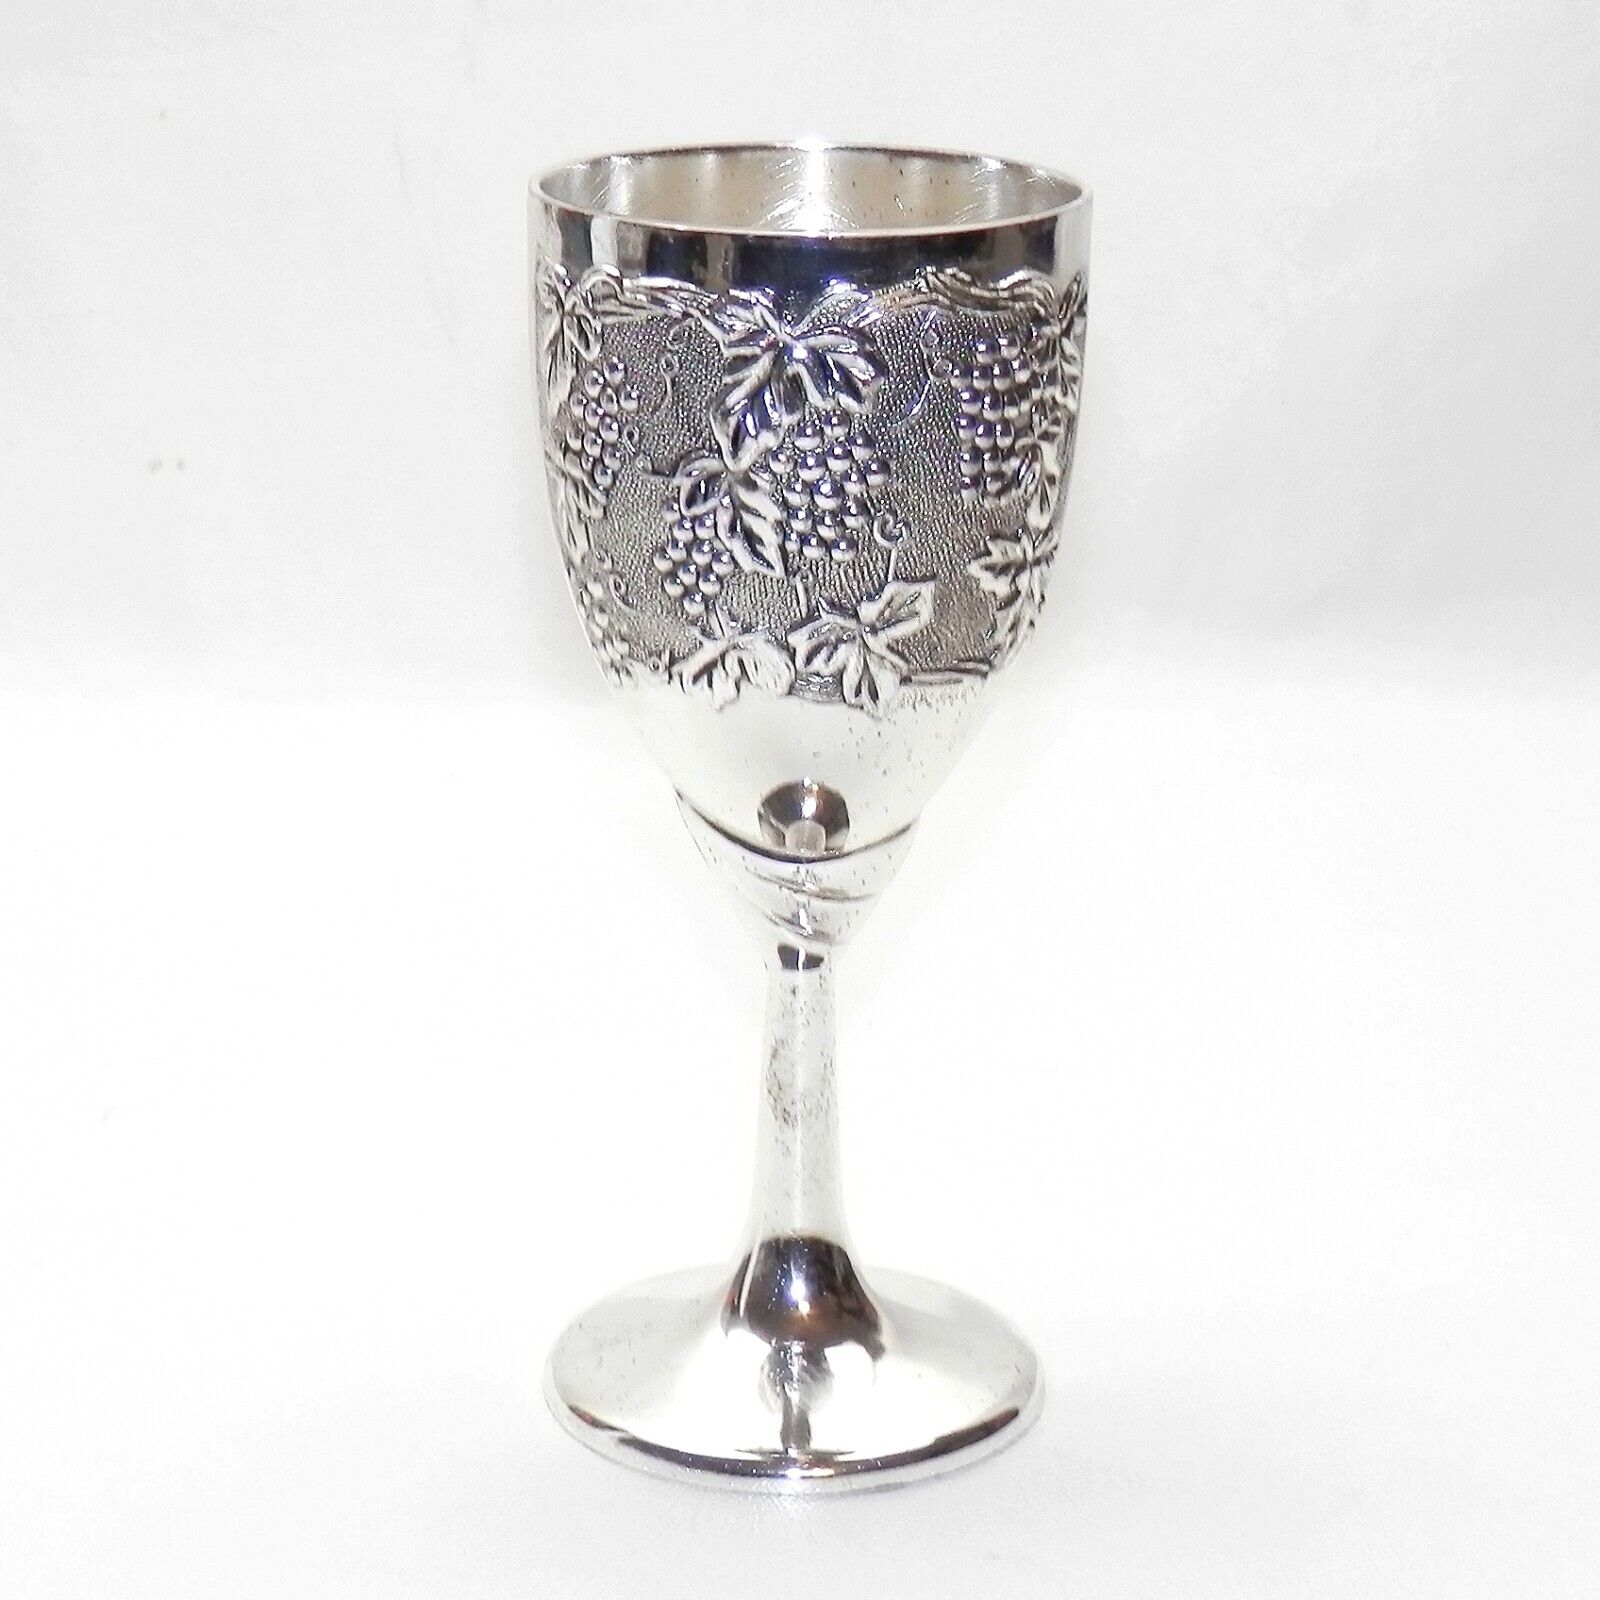 Vintage Sterling Silver 925 Judaic Kiddush Cup with Grape Motif 4.19oz / 118g